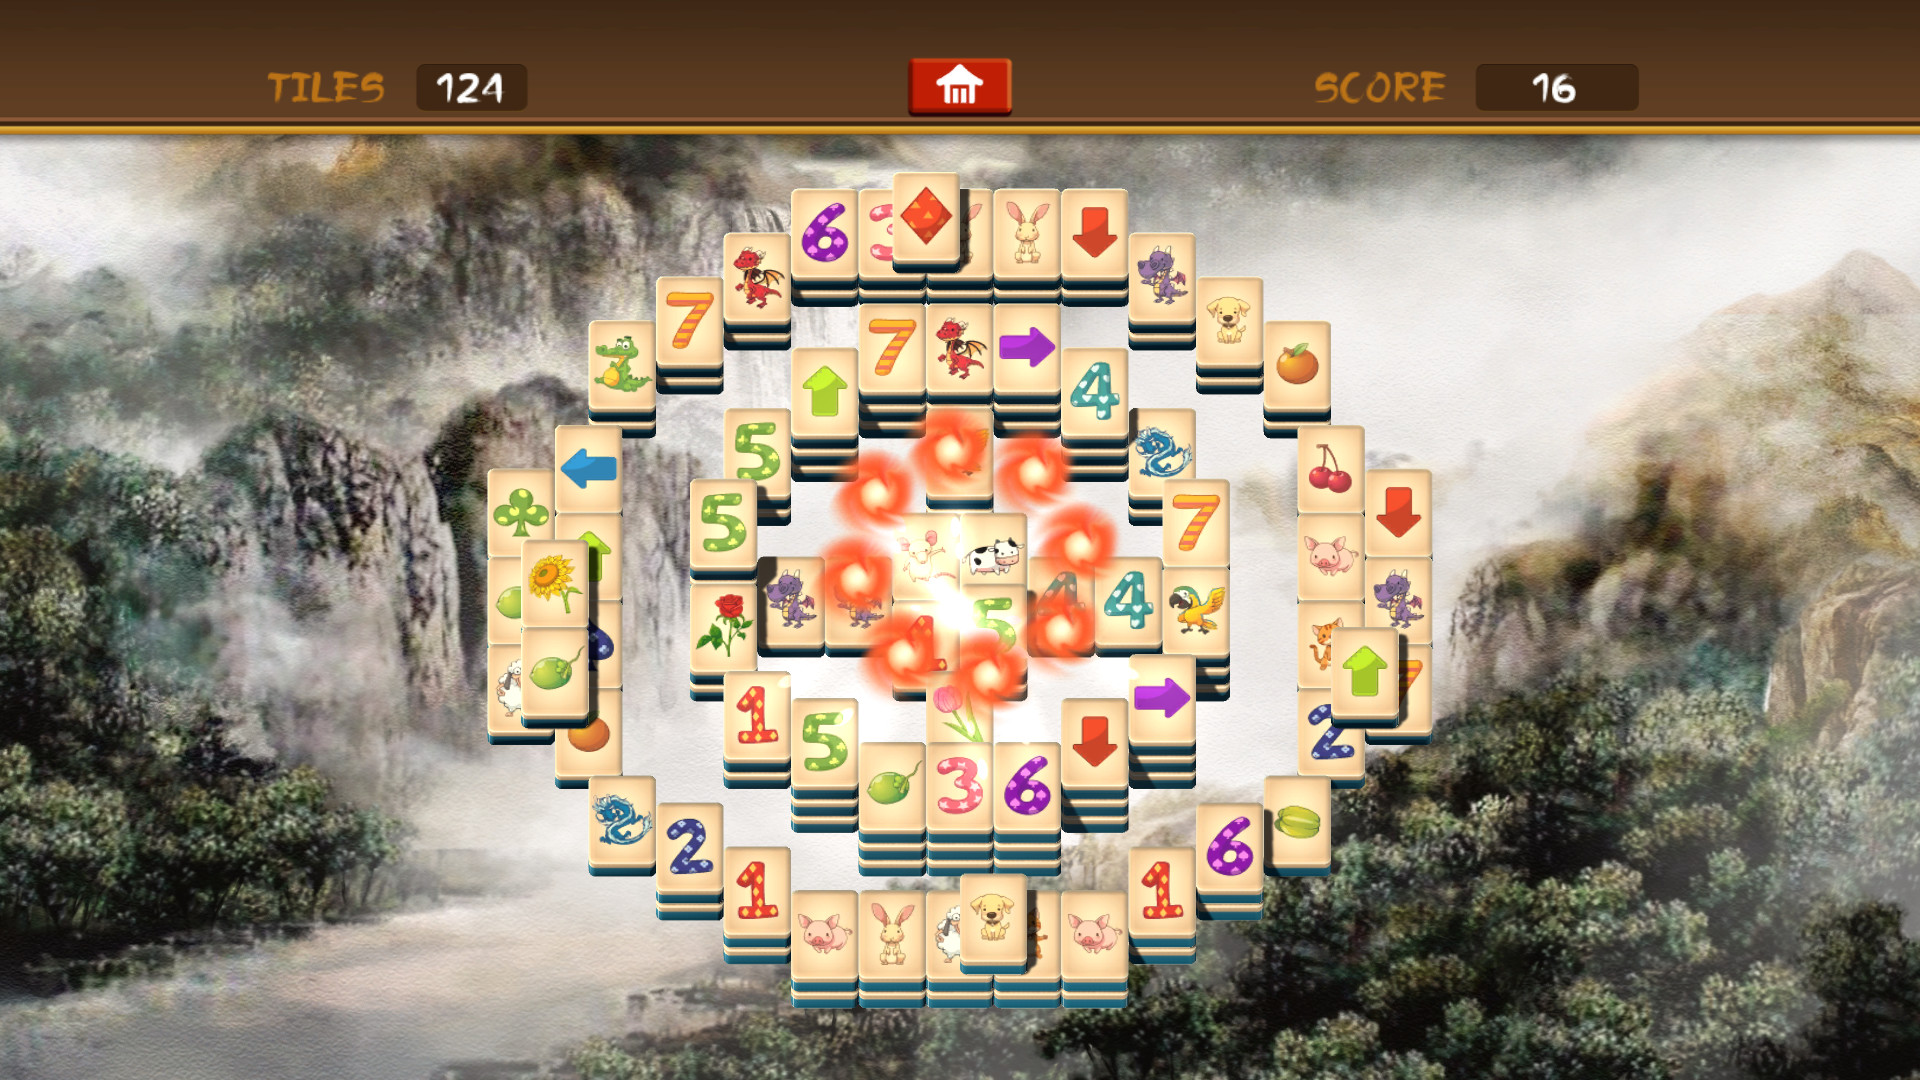 World Mahjong (Original) on Steam